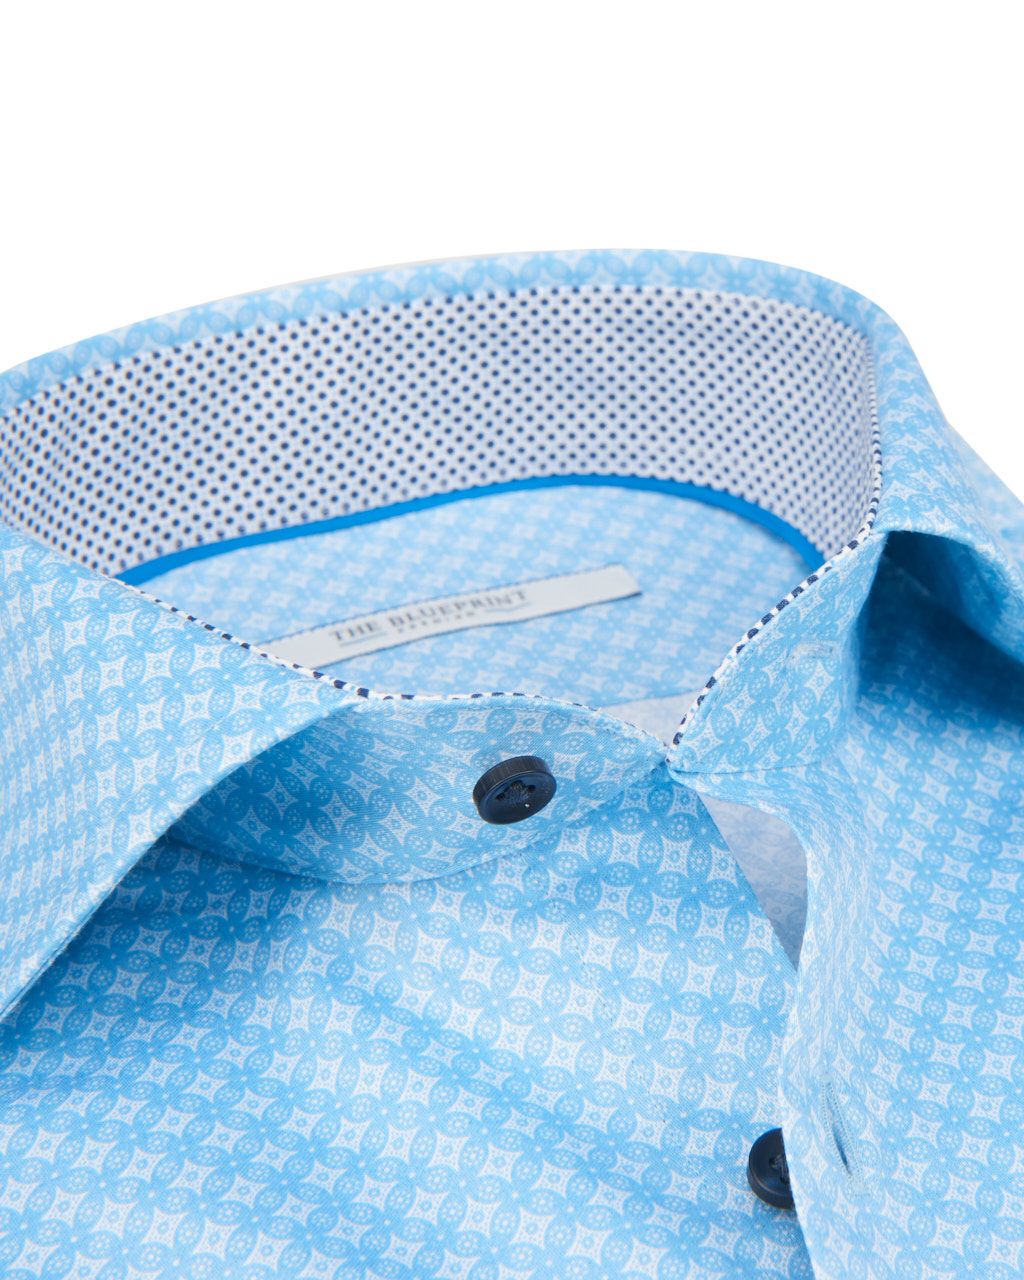 The BLUEPRINT Premium Trendy overhemd LM Lichtblauw print 061892-001-L